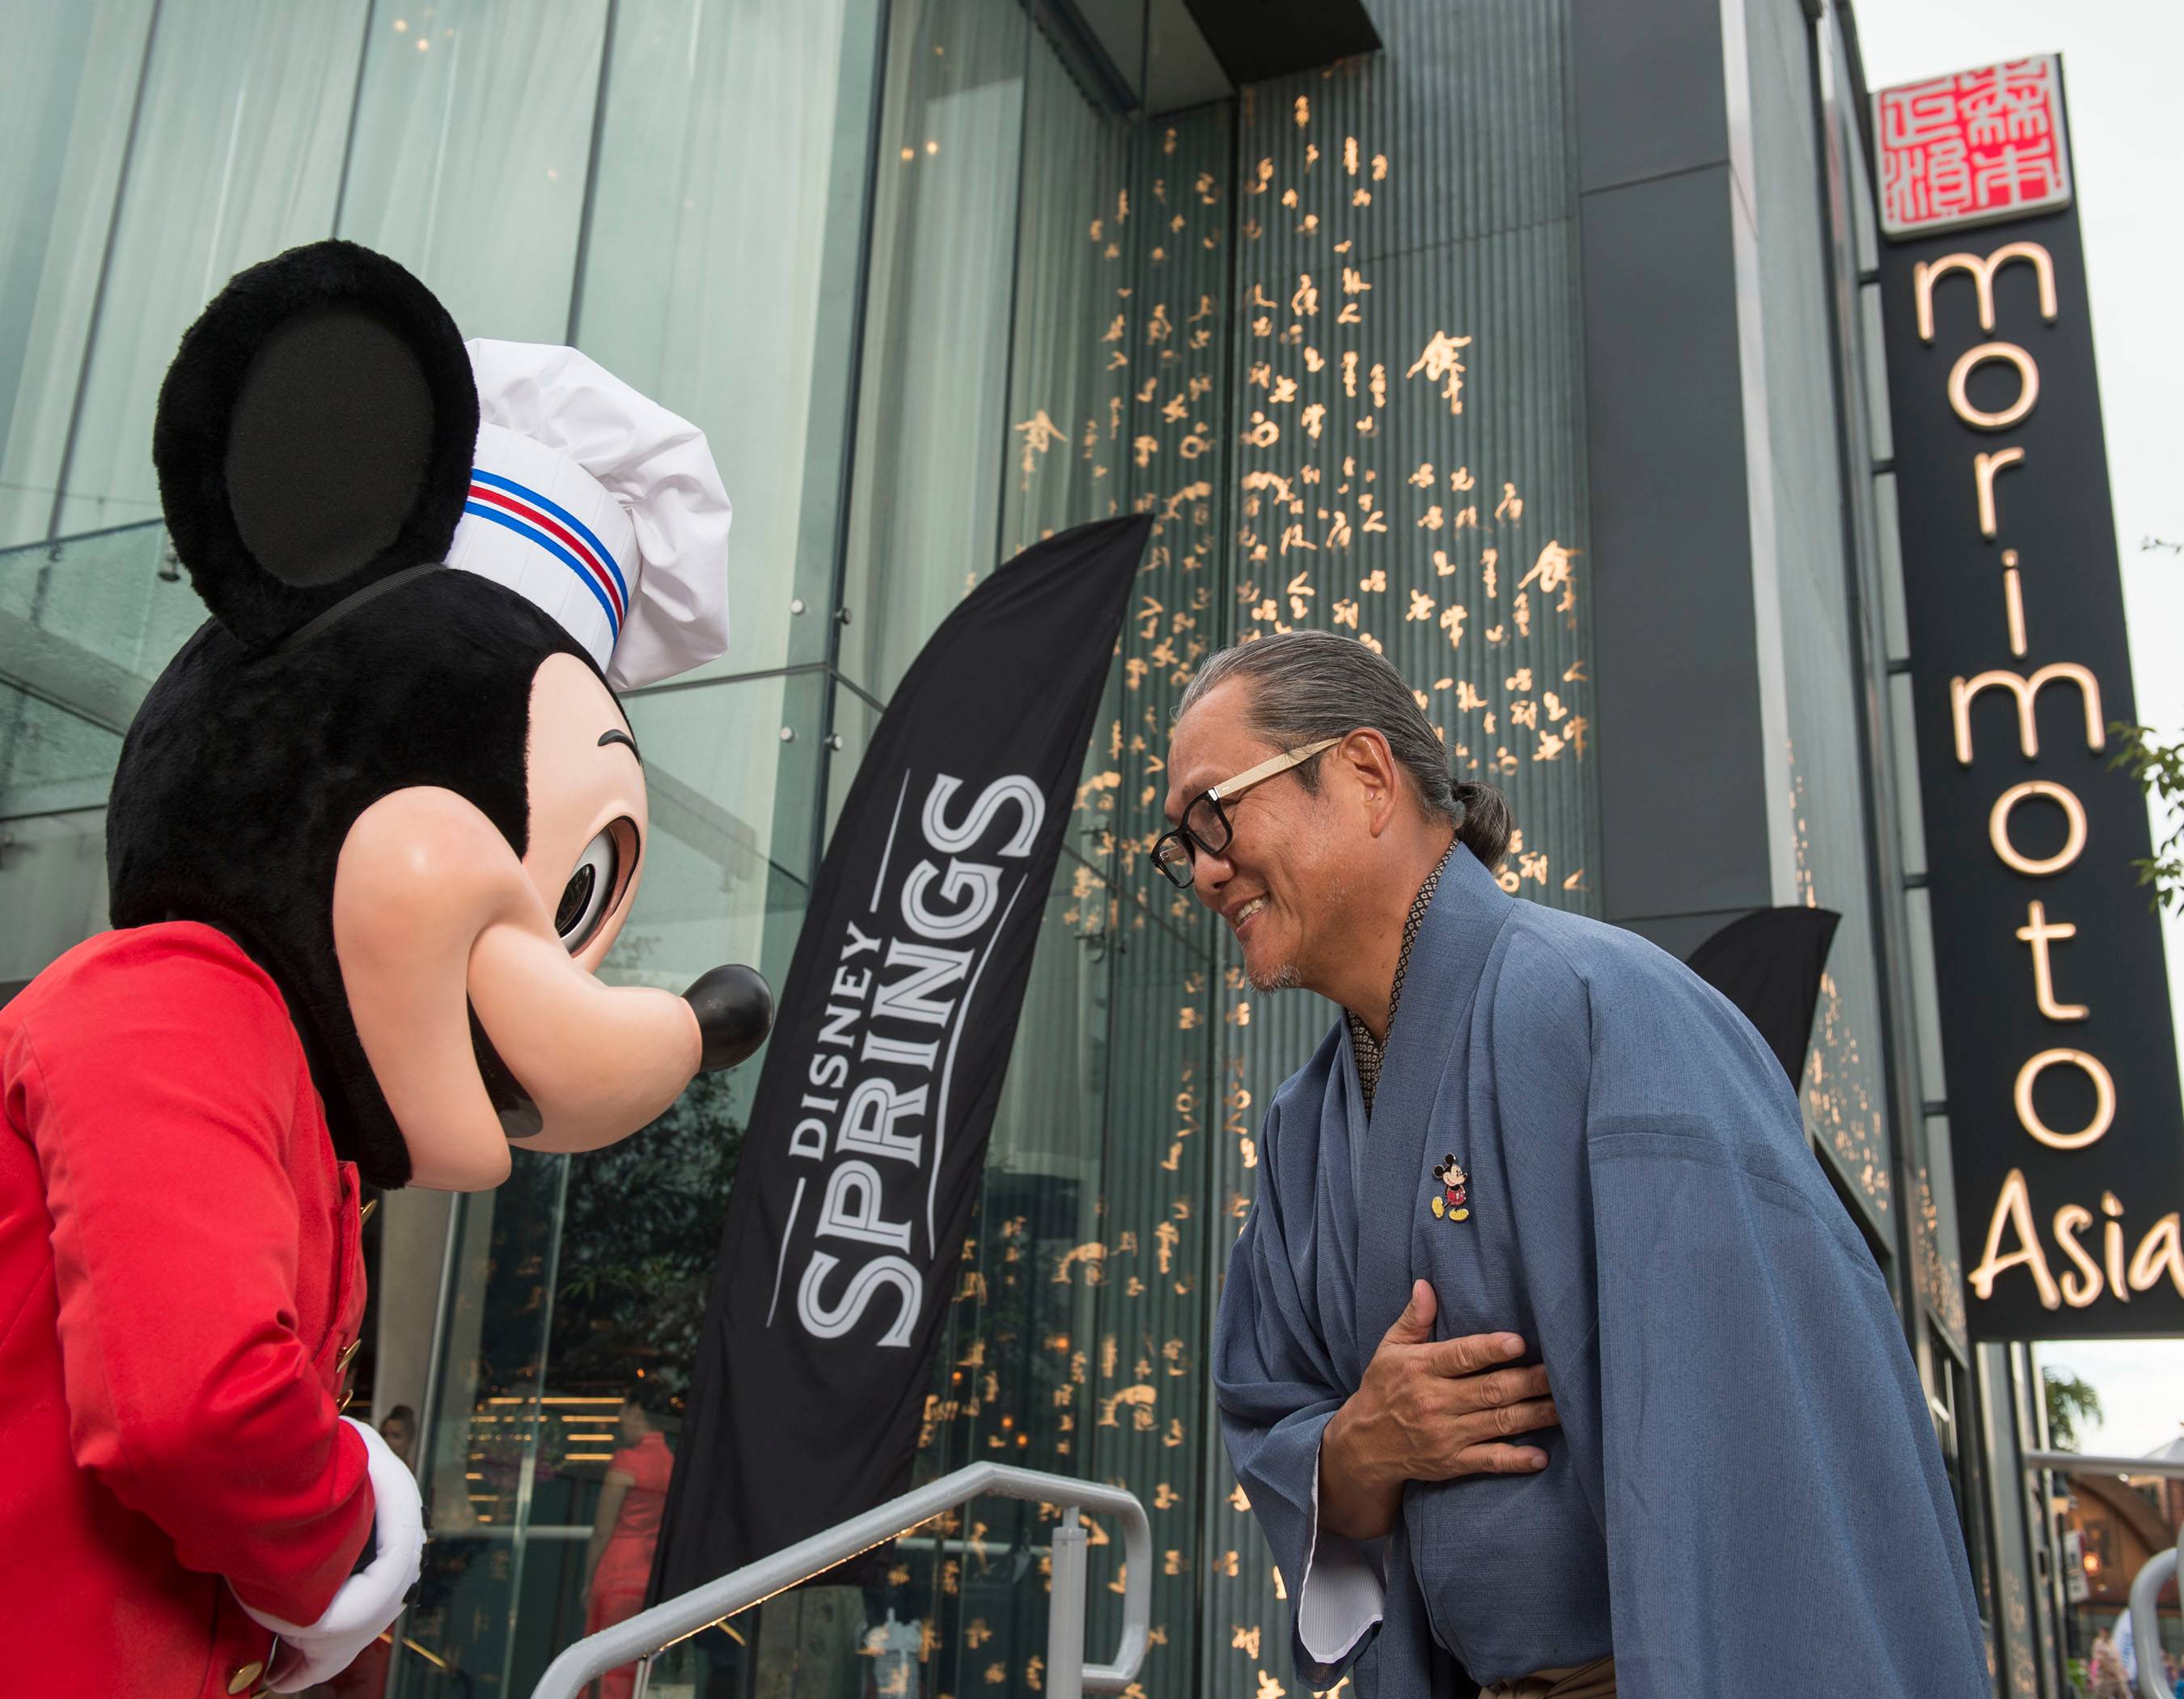 Iron Chef Masaharu Morimoto meeting guests at Morimoto Asia in Disney Springs this weekend